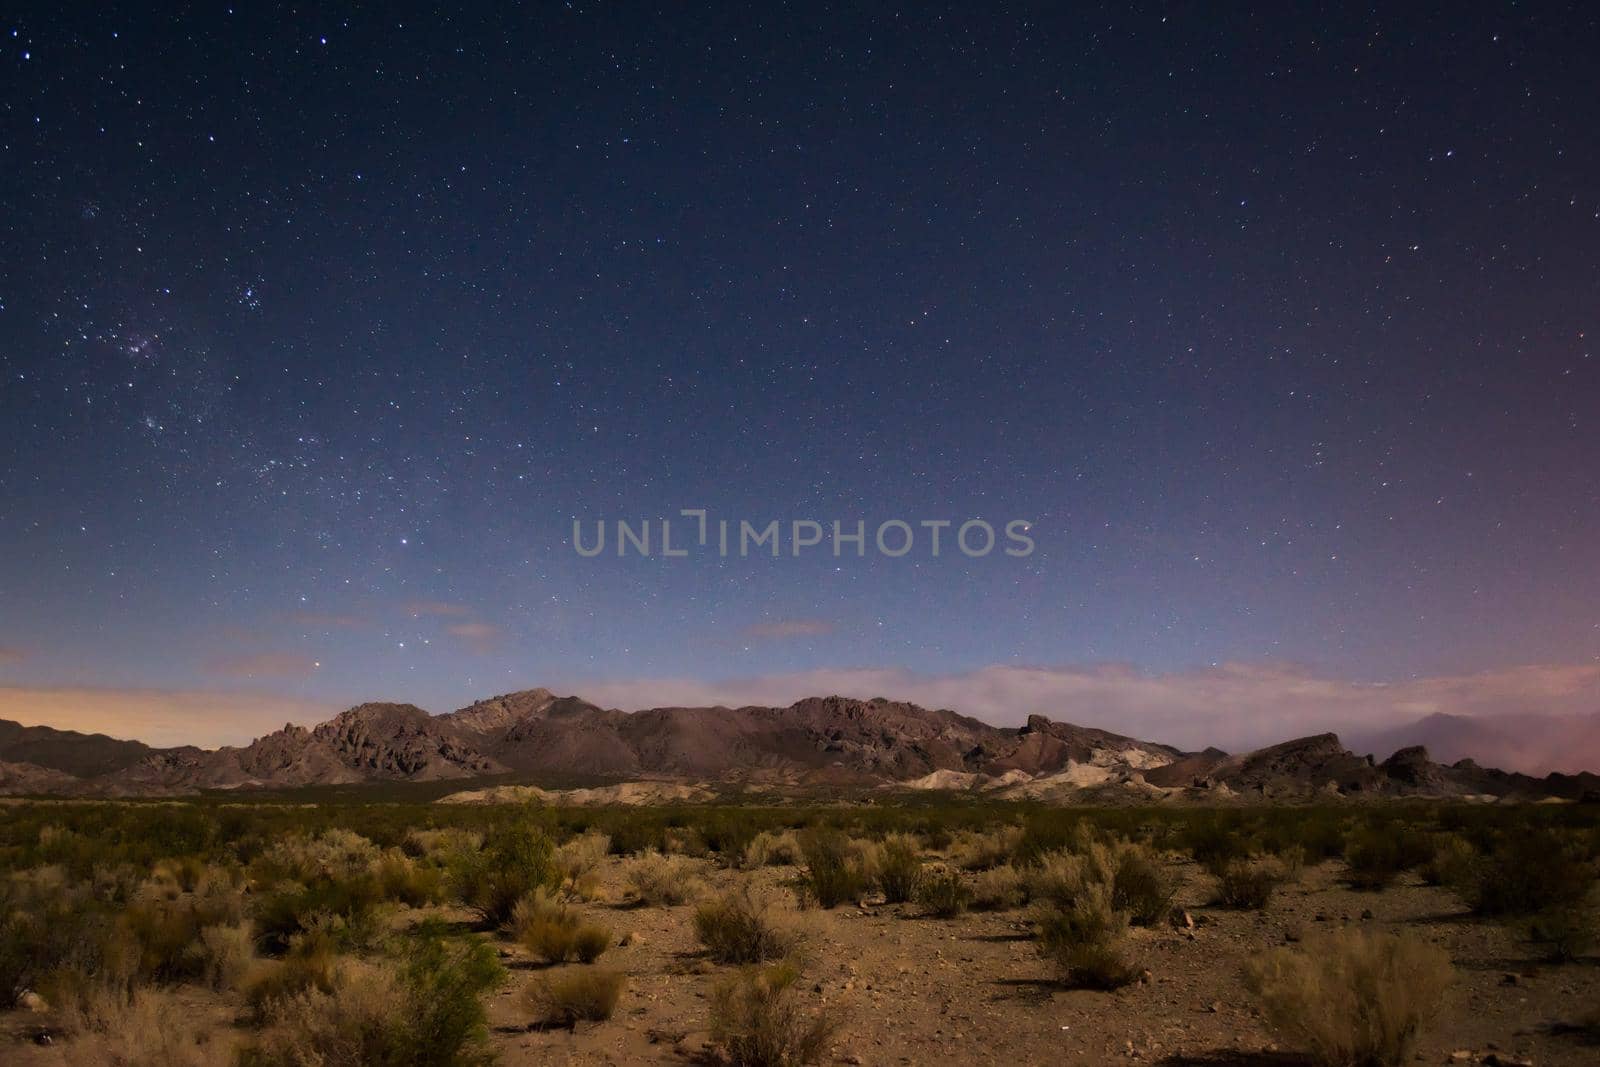 Starry night sky above the desert near Uspallata, Mendoza, Argentina.